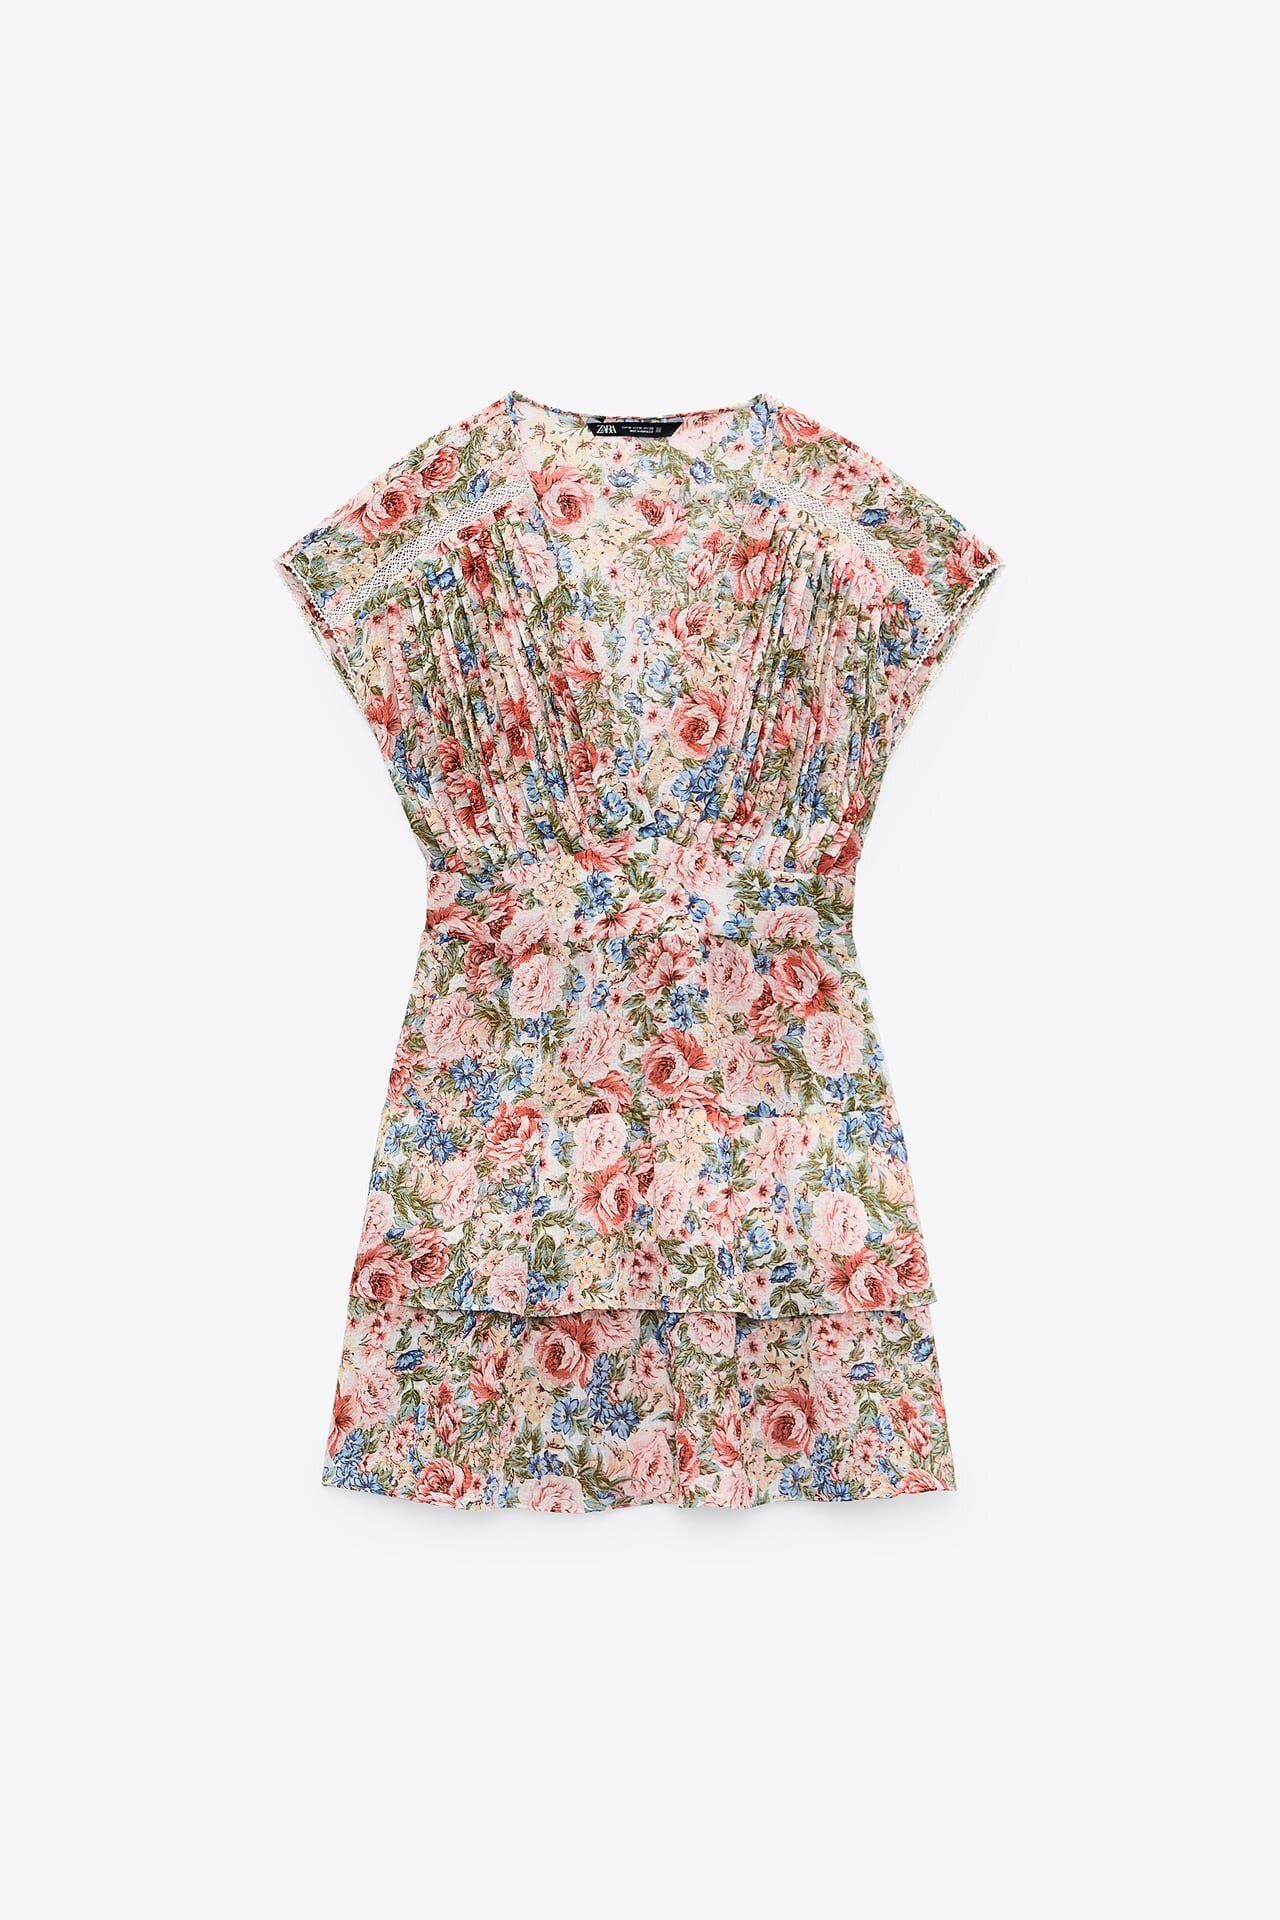 Zara Floral Print Mini Dress in ...